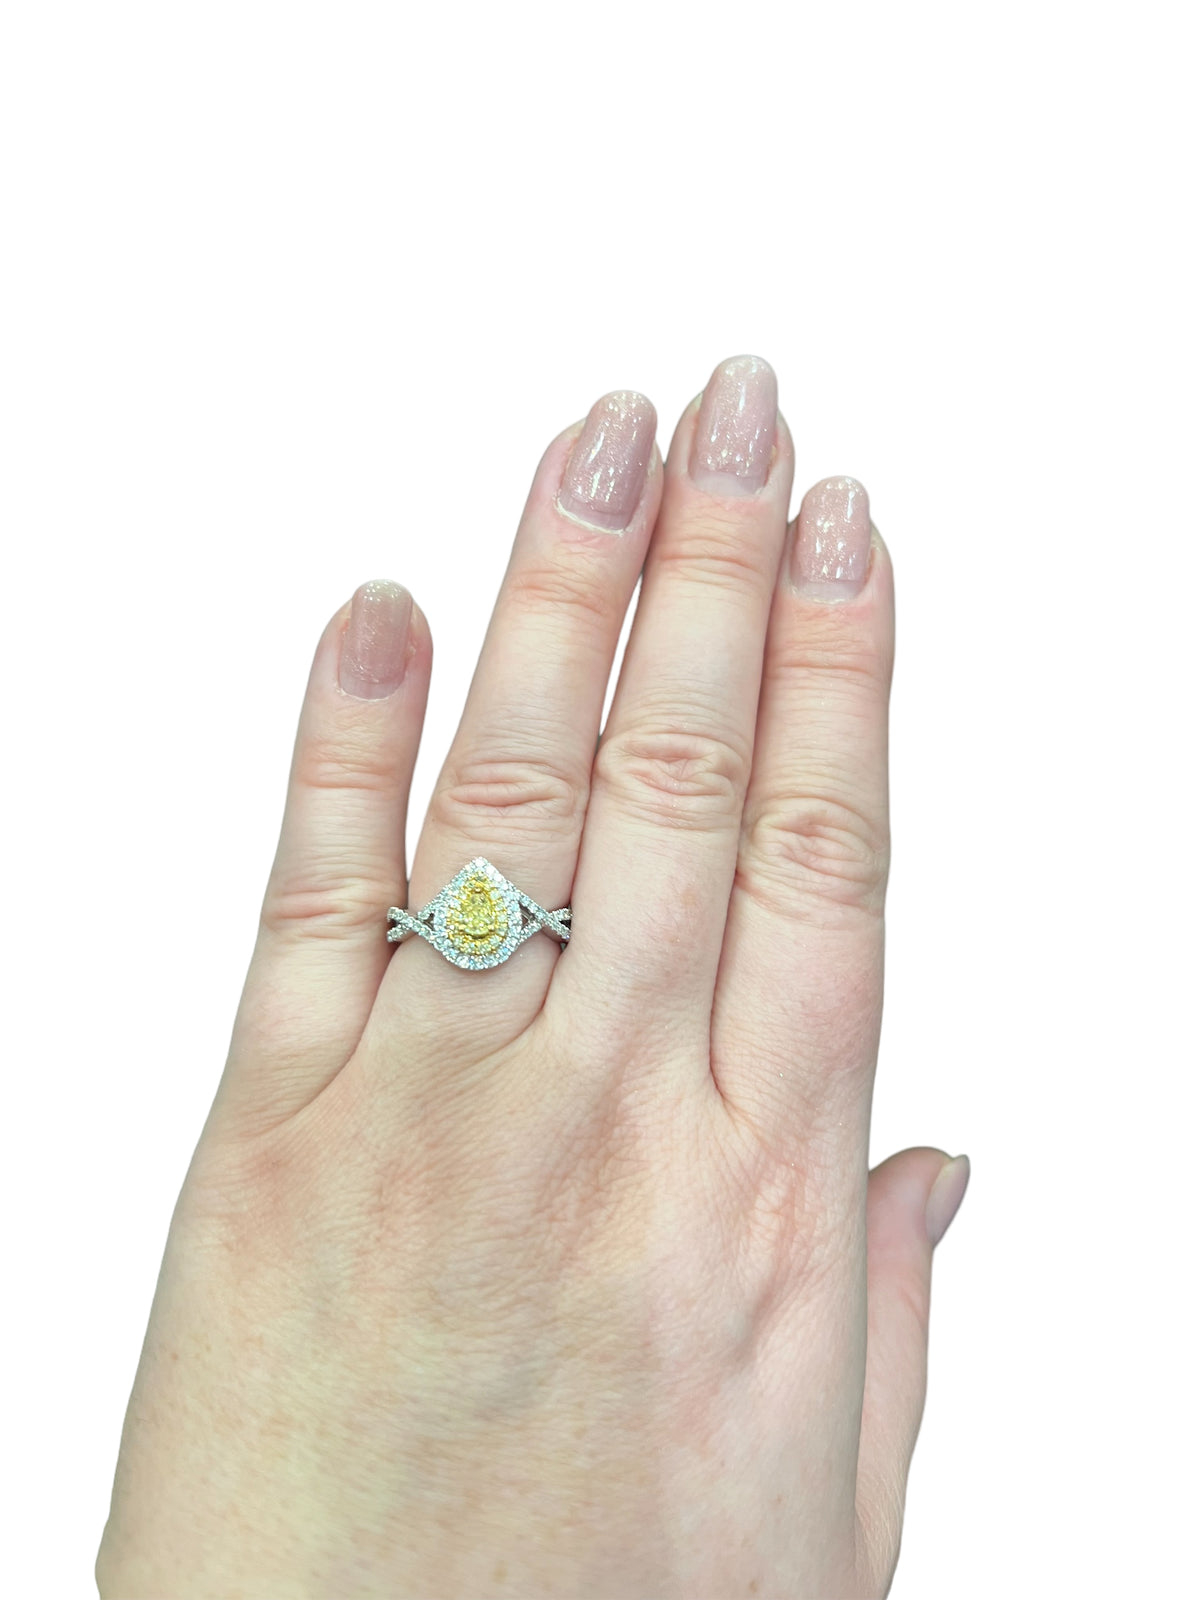 18K White Gold Fancy Yellow and White Diamond Ring - size 6.5